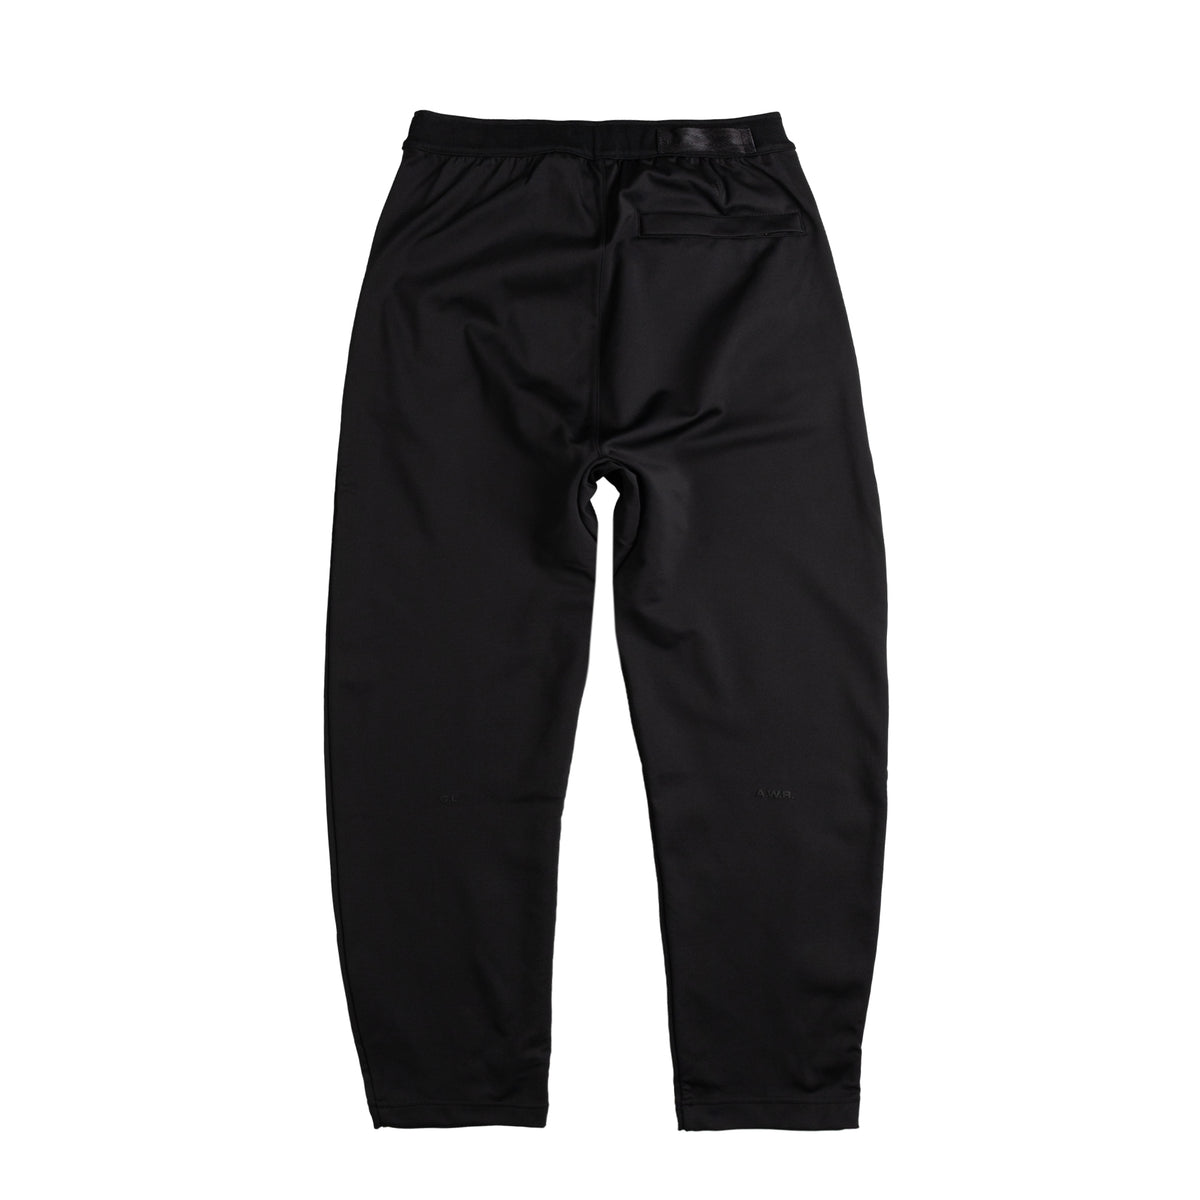 Nike x Nocta Knit Pants – buy now at Asphaltgold Online Store!